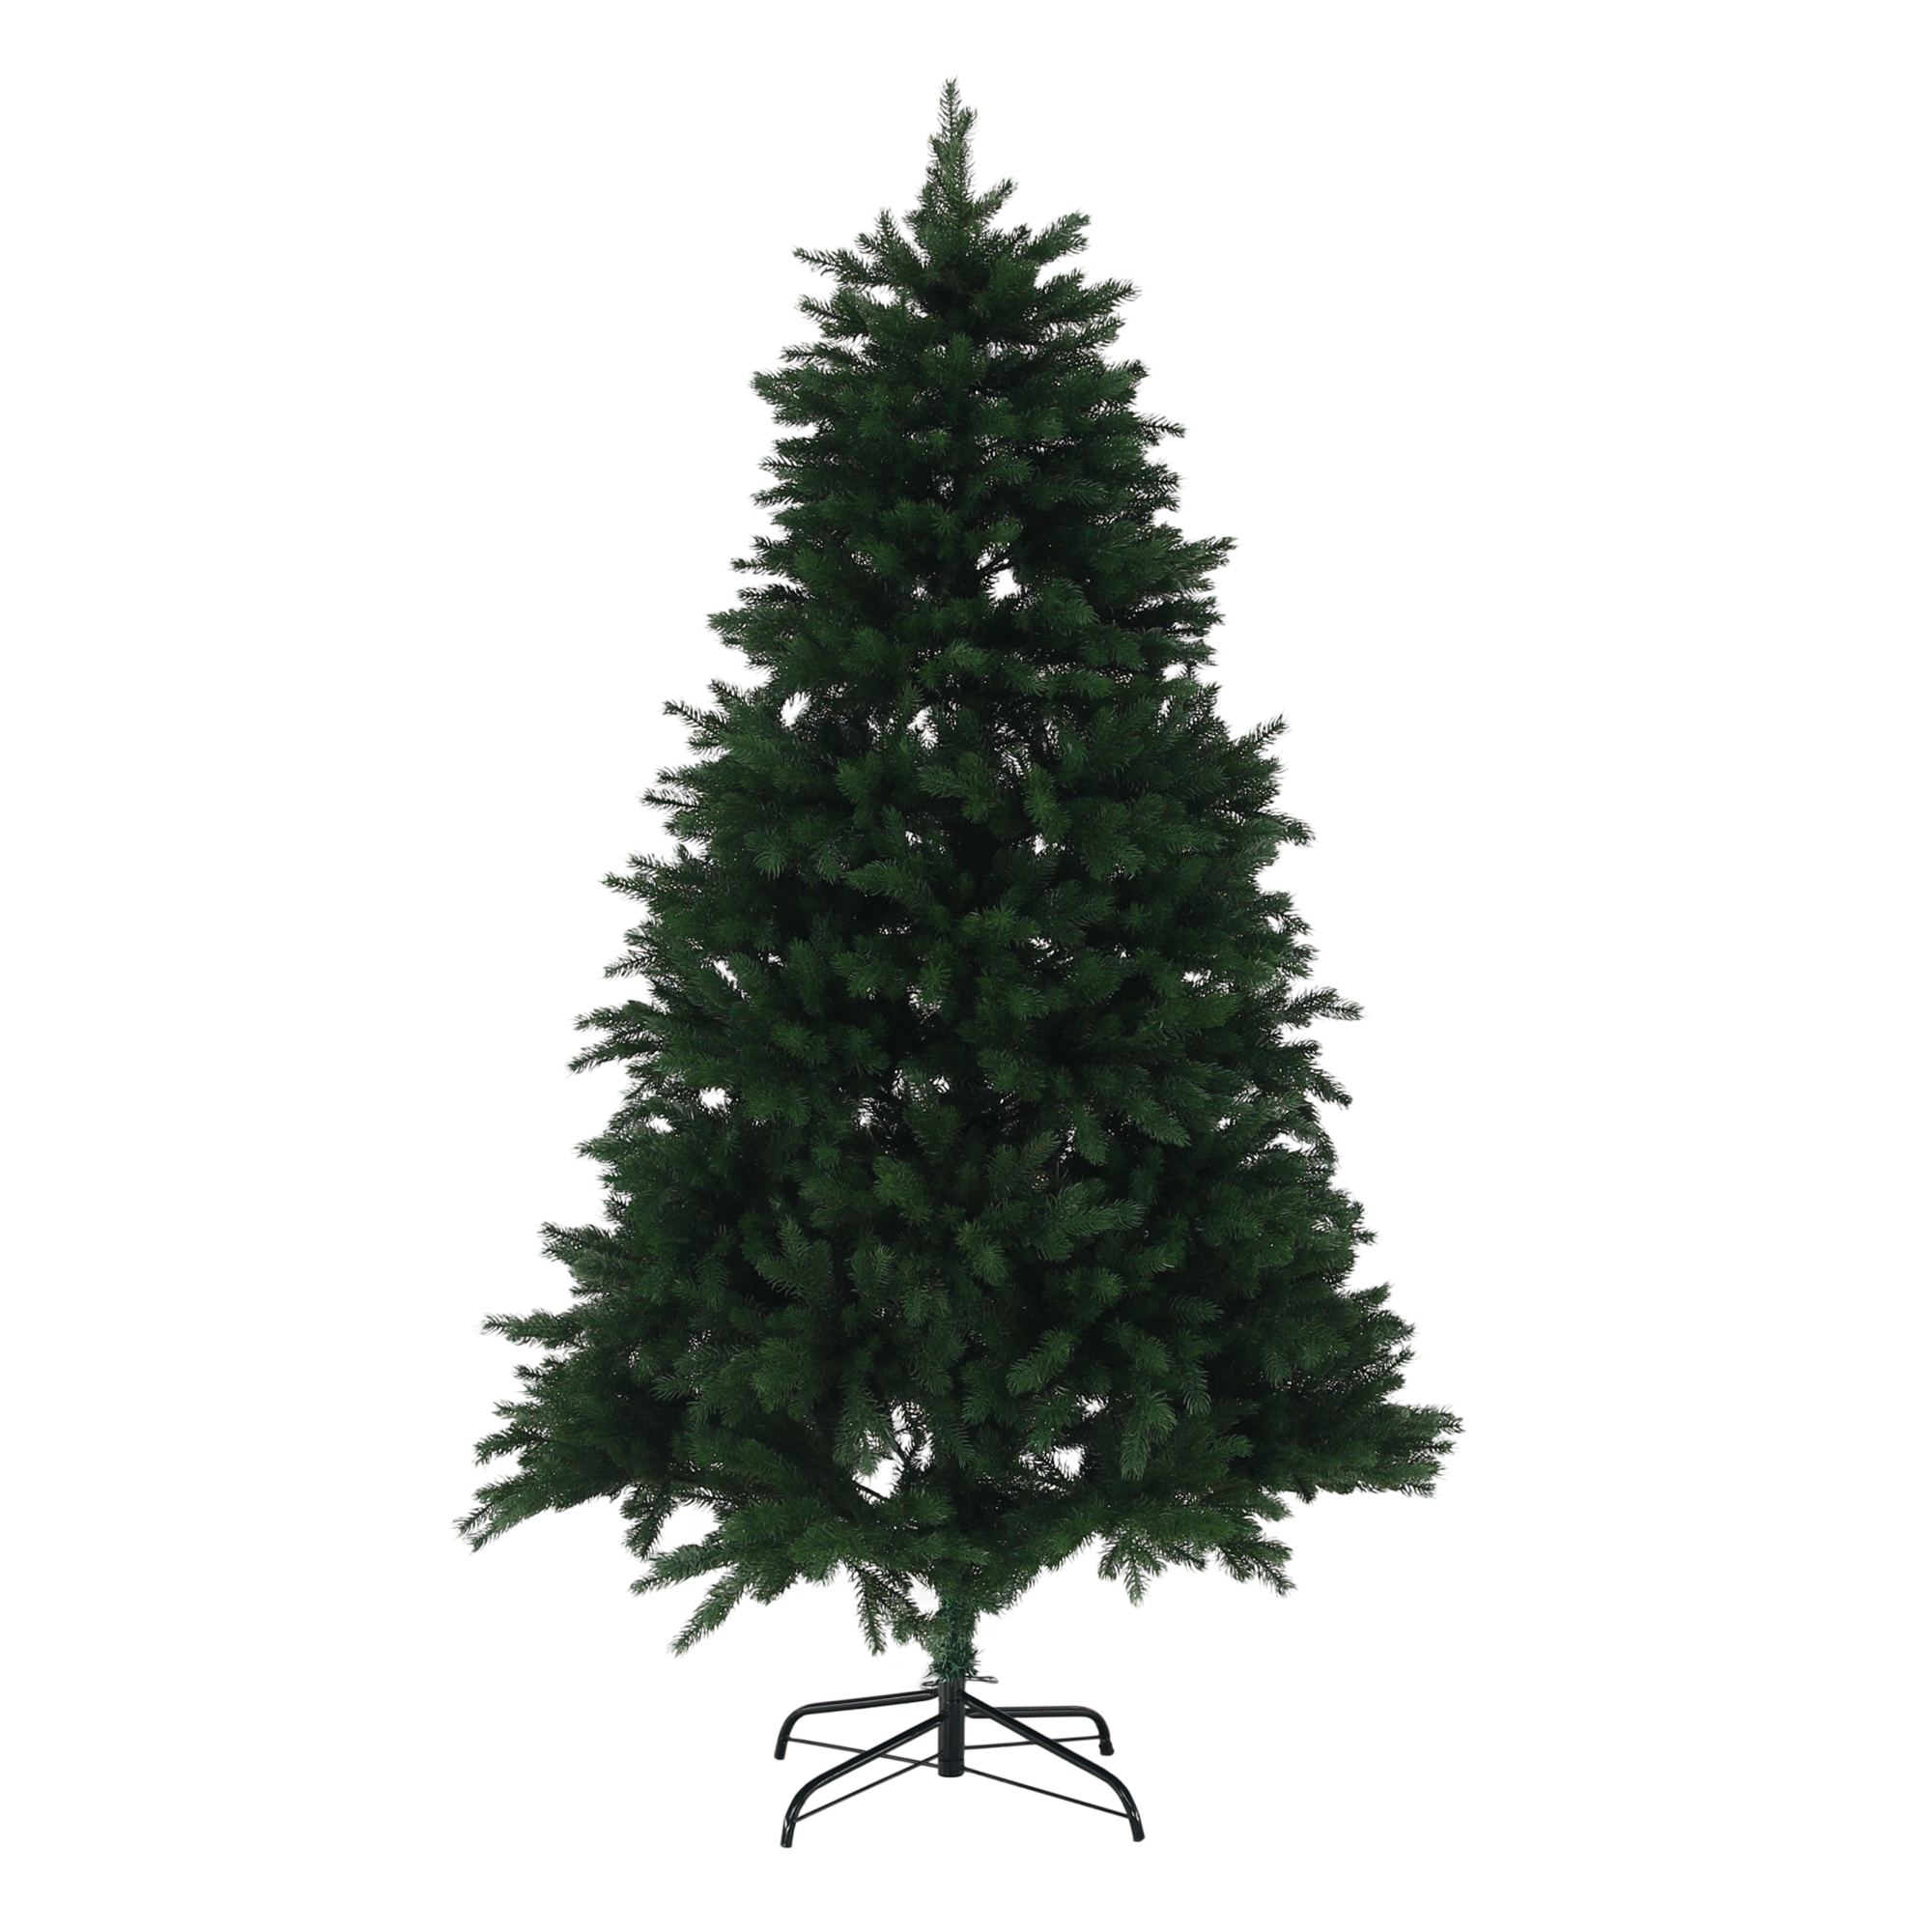 Full 3D Karácsonyfa, zöld,180 cm, CHRISTMAS TYP 11